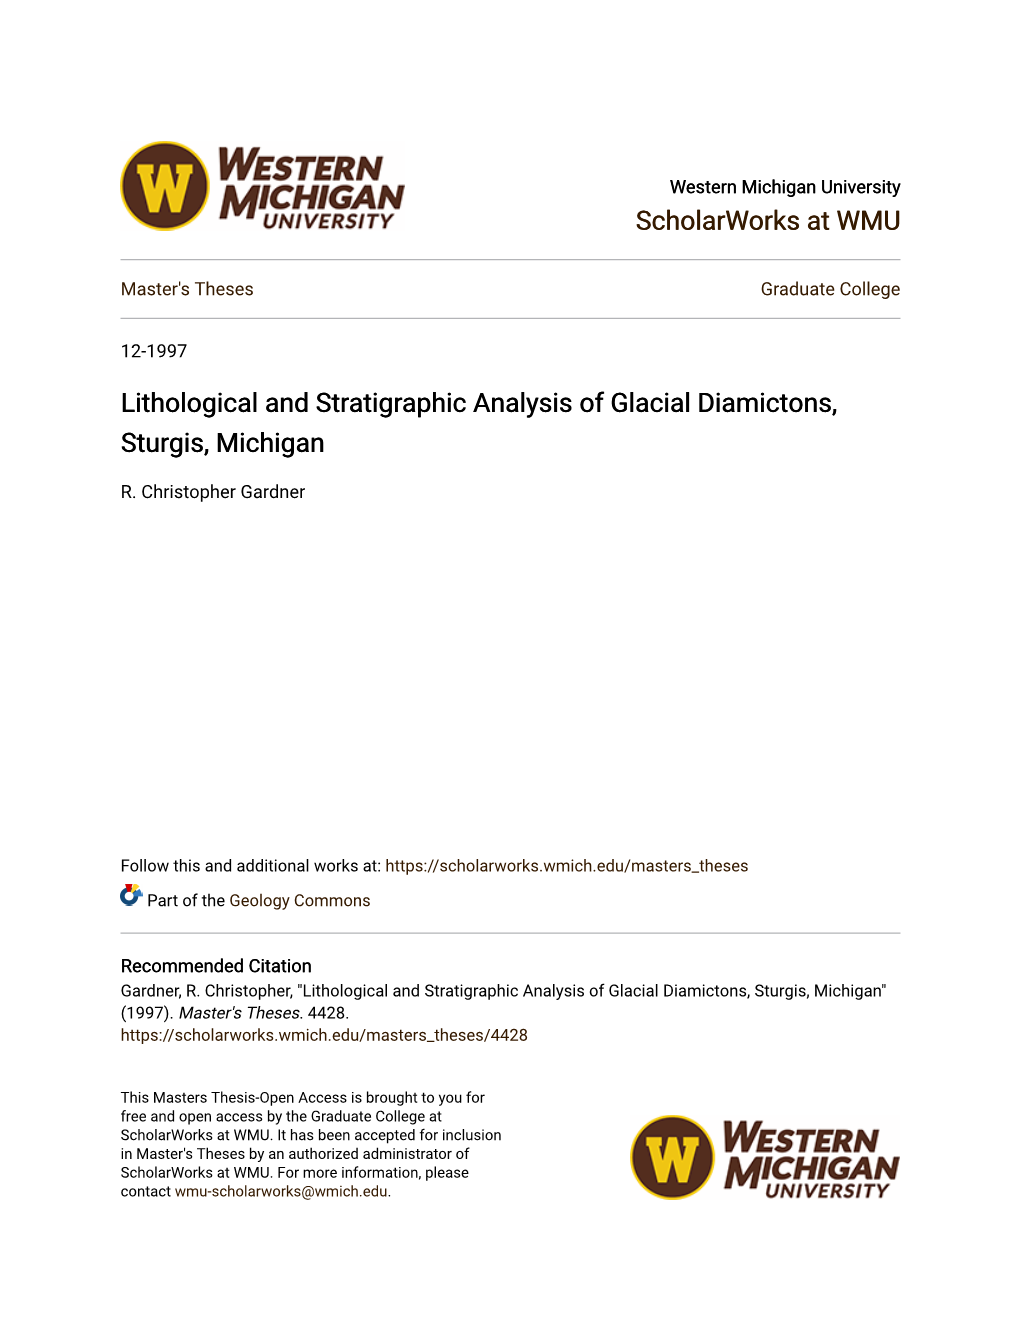 Lithological and Stratigraphic Analysis of Glacial Diamictons, Sturgis, Michigan